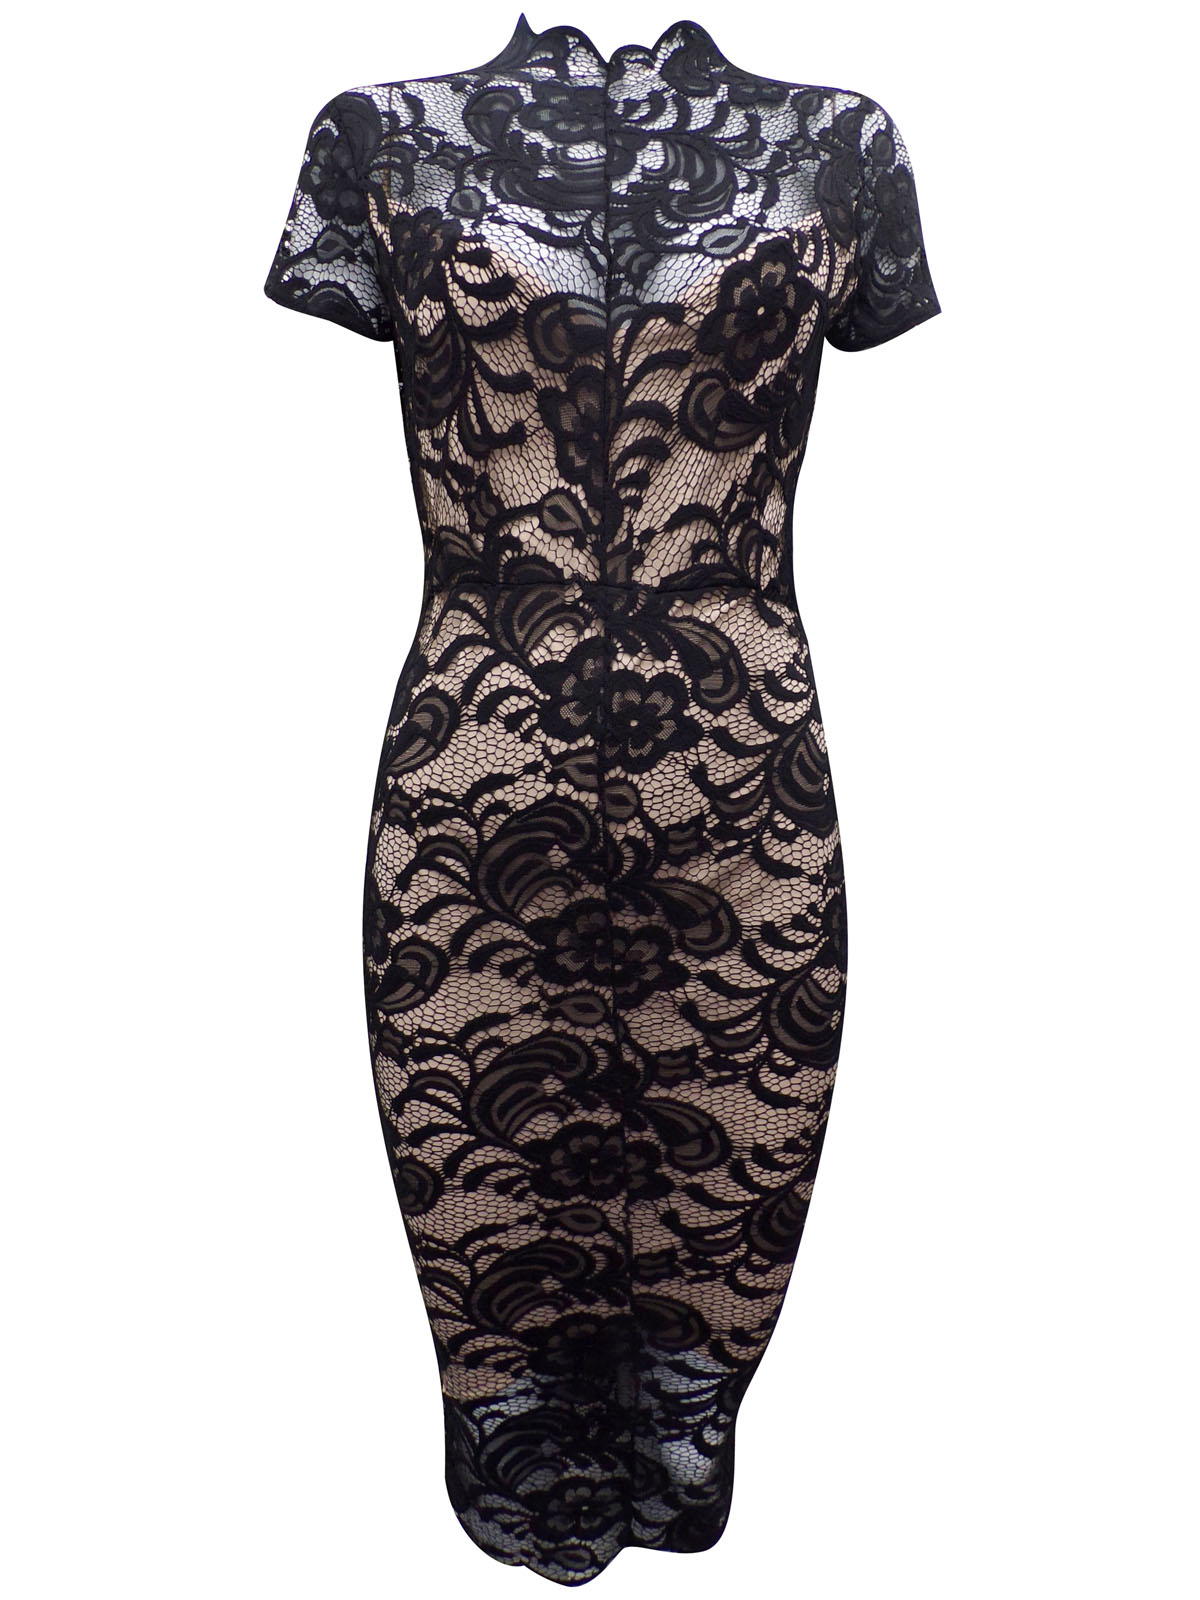 BOOHOO - - B00H00 BLACK High Neck Lace Midi Dress - Size 8 to 14